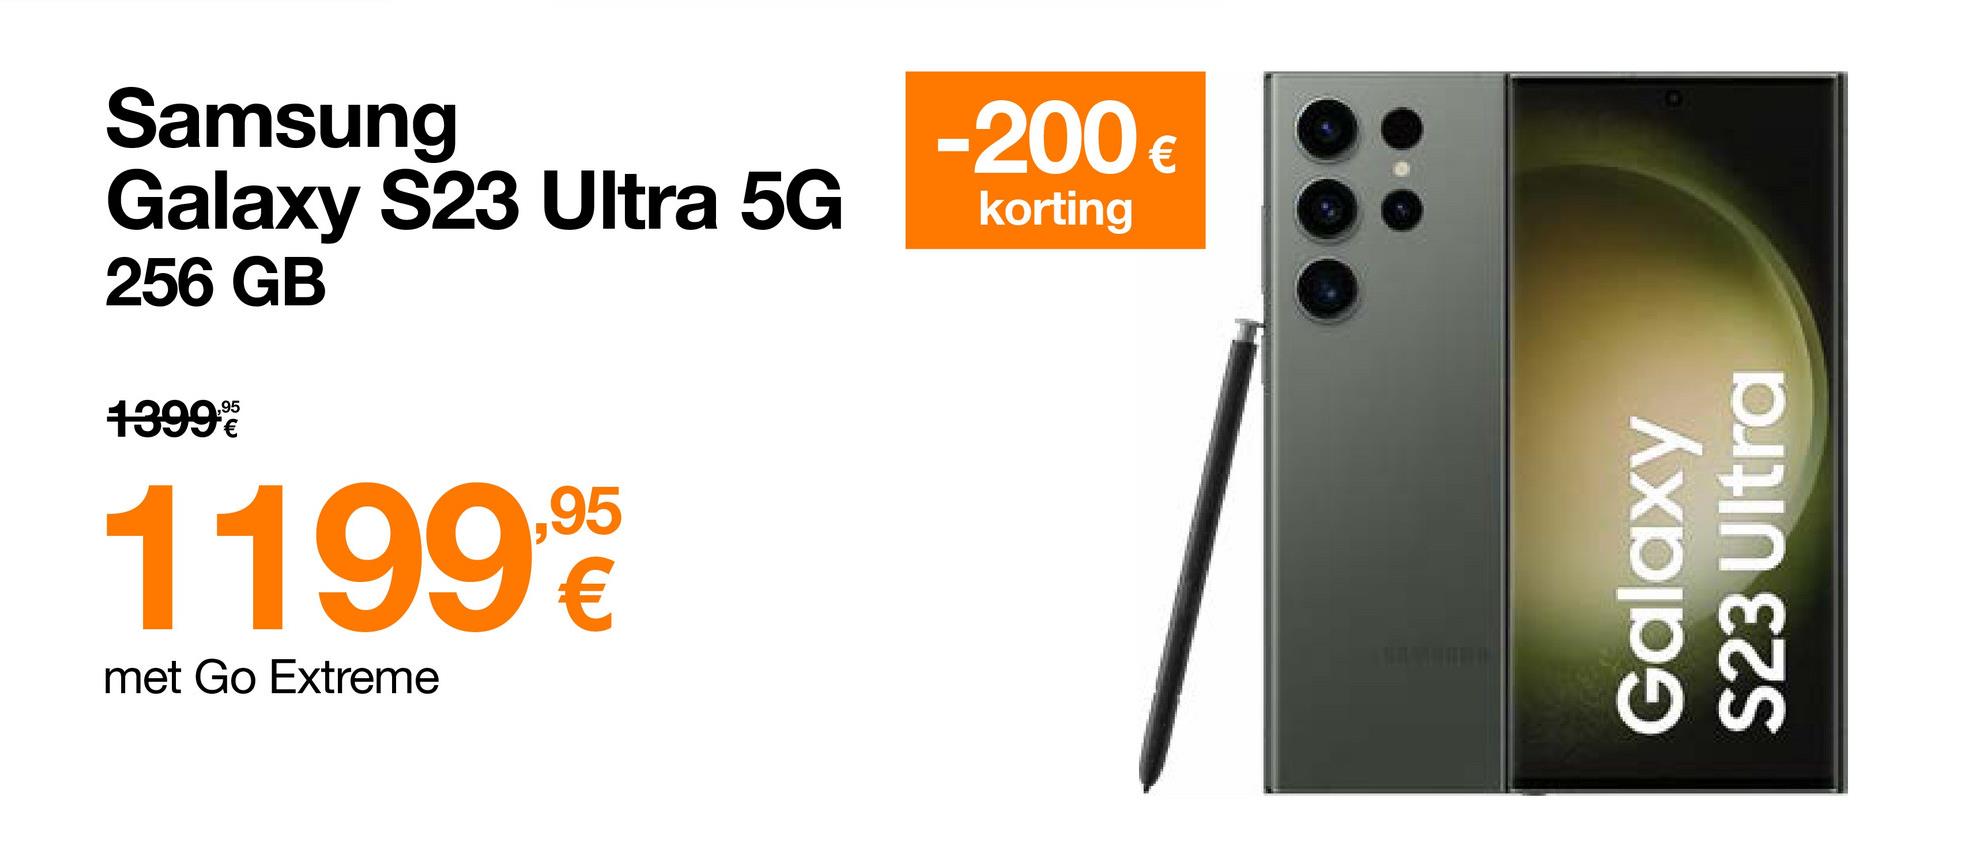 Samsung
Galaxy S23 Ultra 5G
256 GB
13999
11999
met Go Extreme
-200 €
korting
Galaxy
S23 Ultra